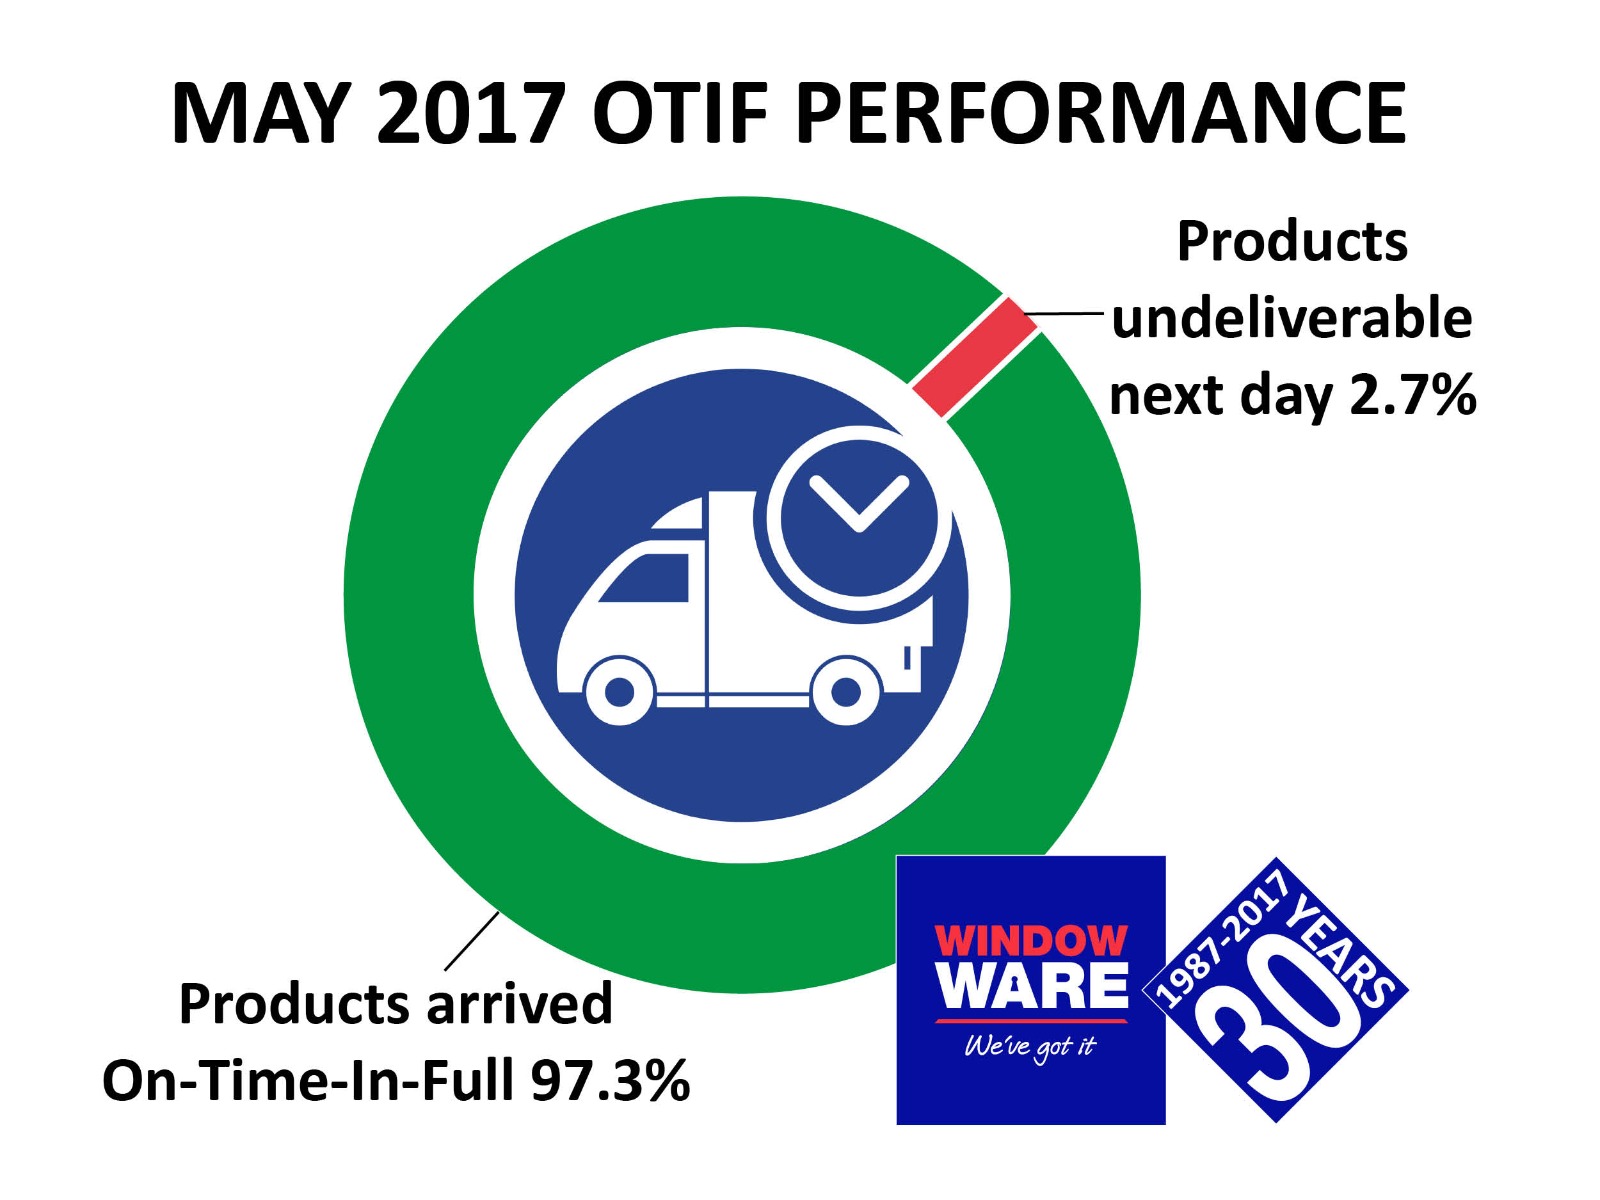 Window Ware shares impressive OTIF May 2017